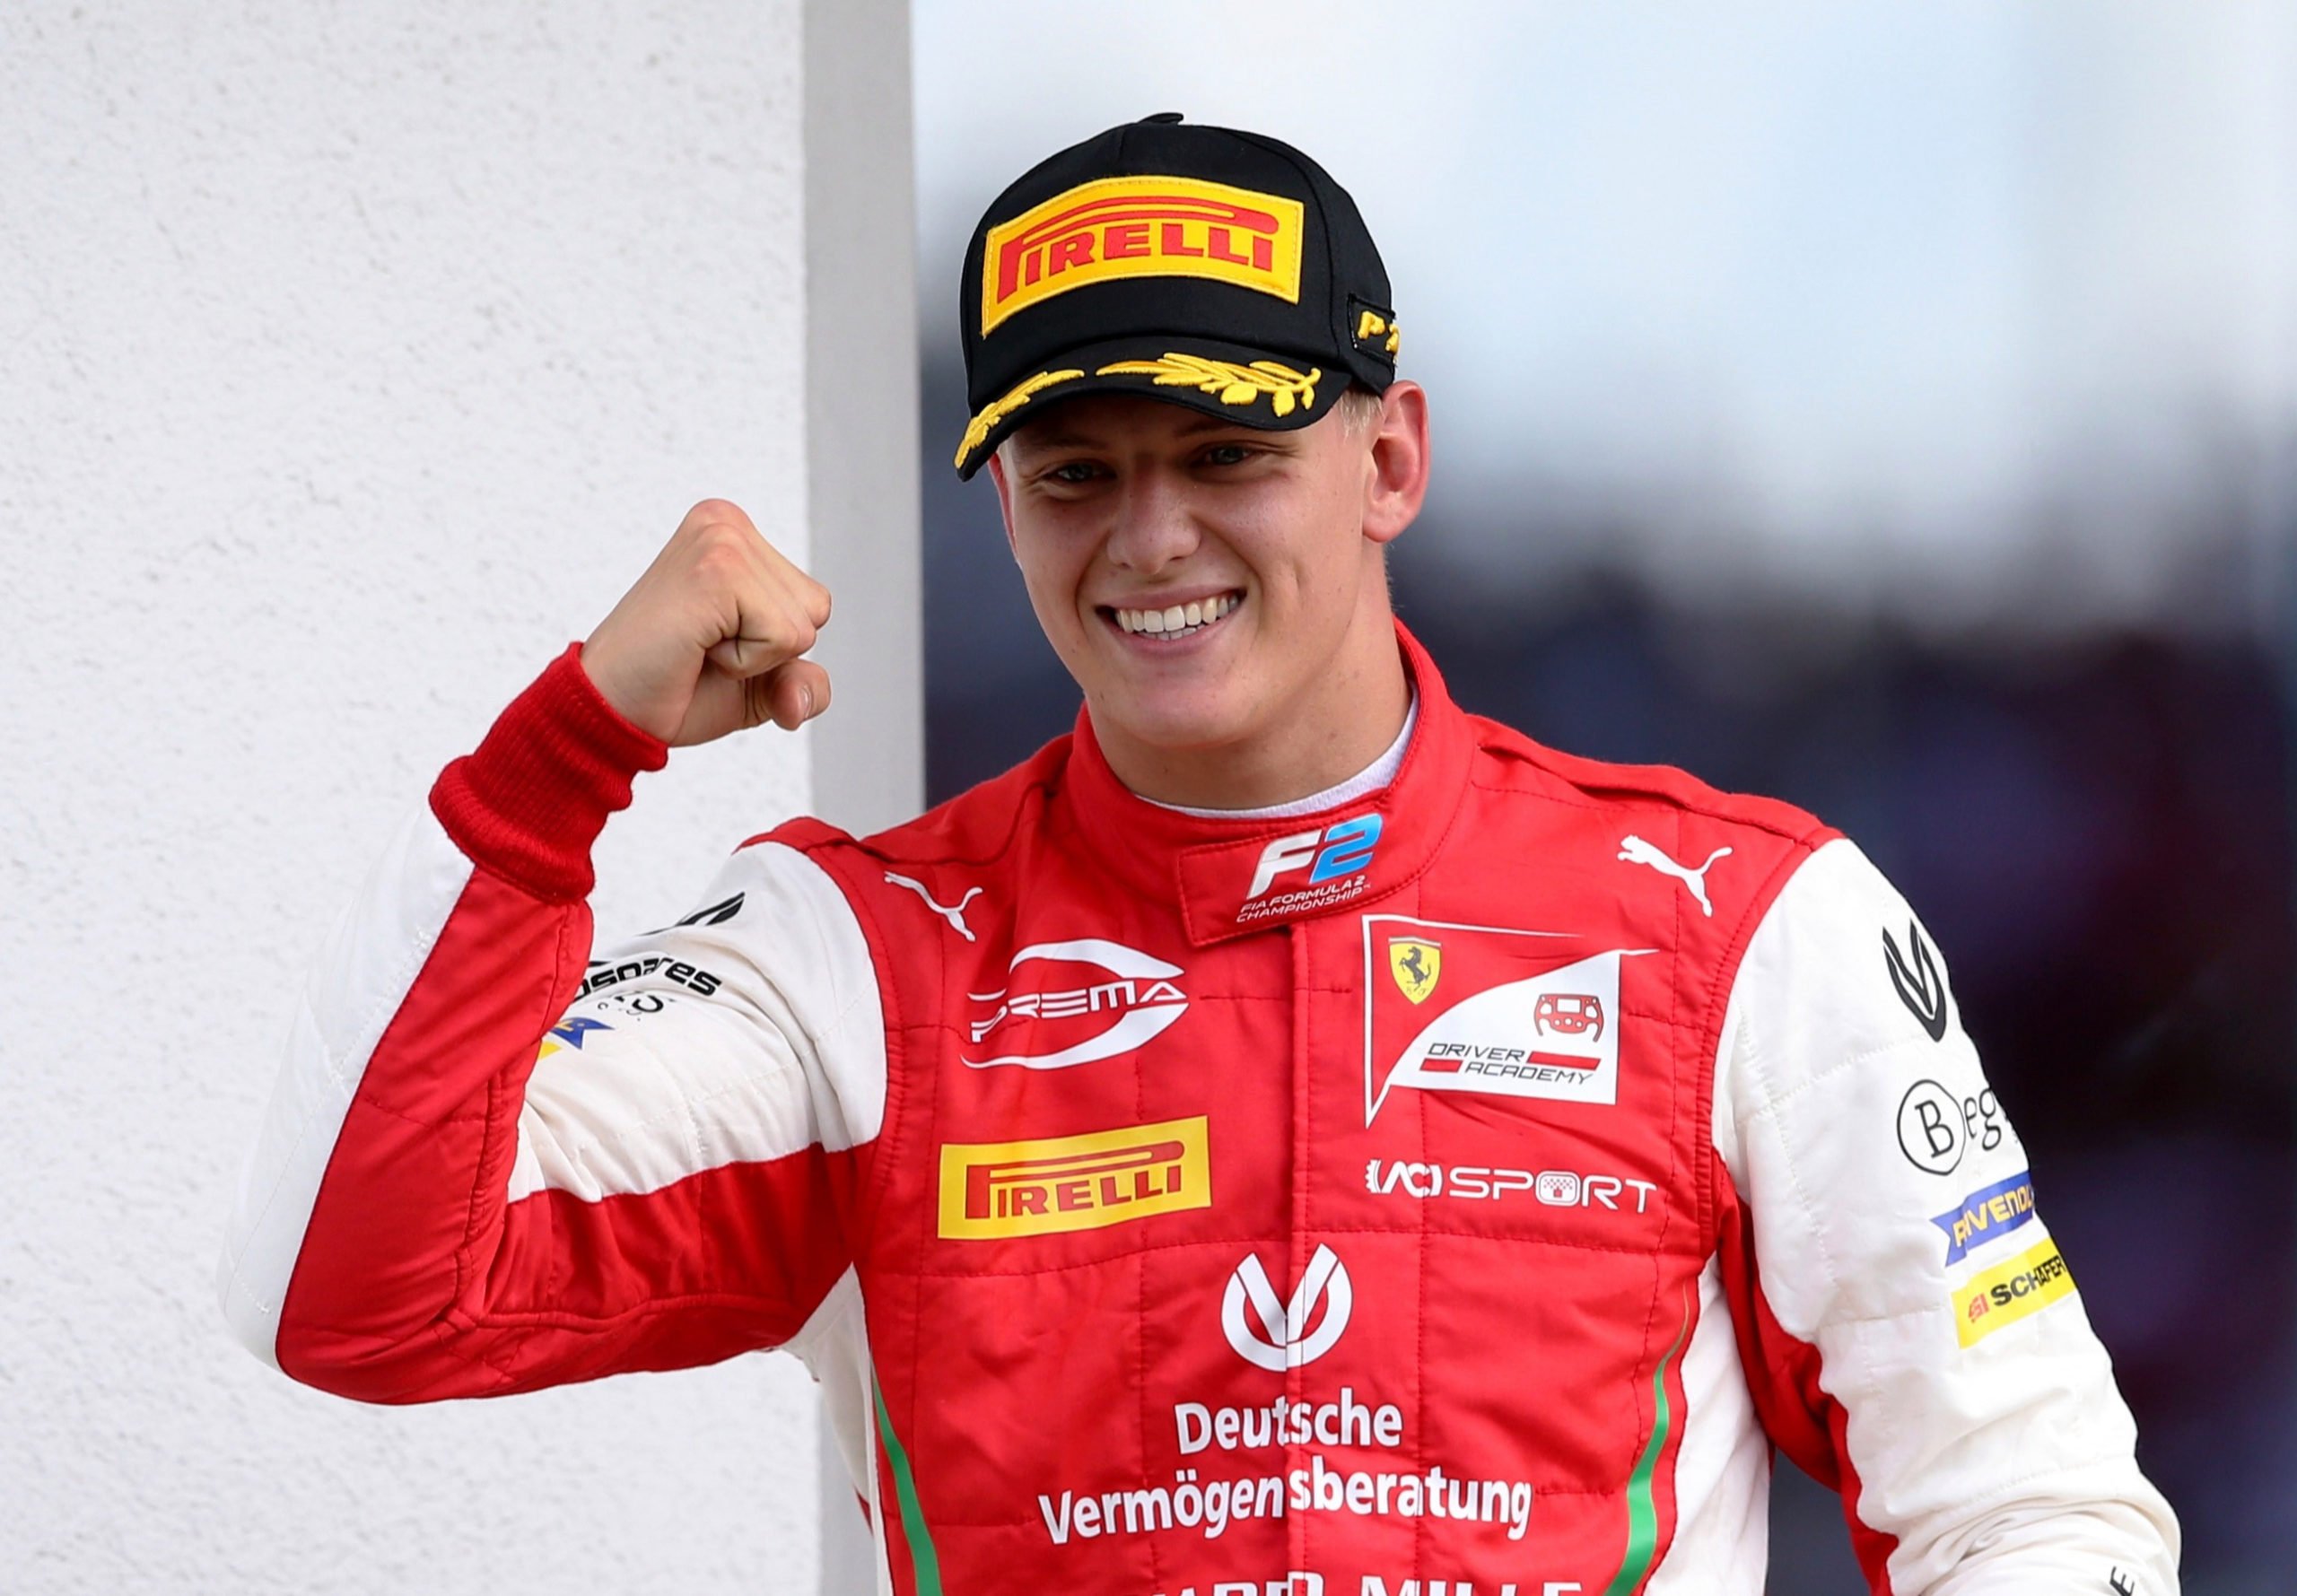 Schumacher and Robert Shwartzman to debut in 2021 F1 Season